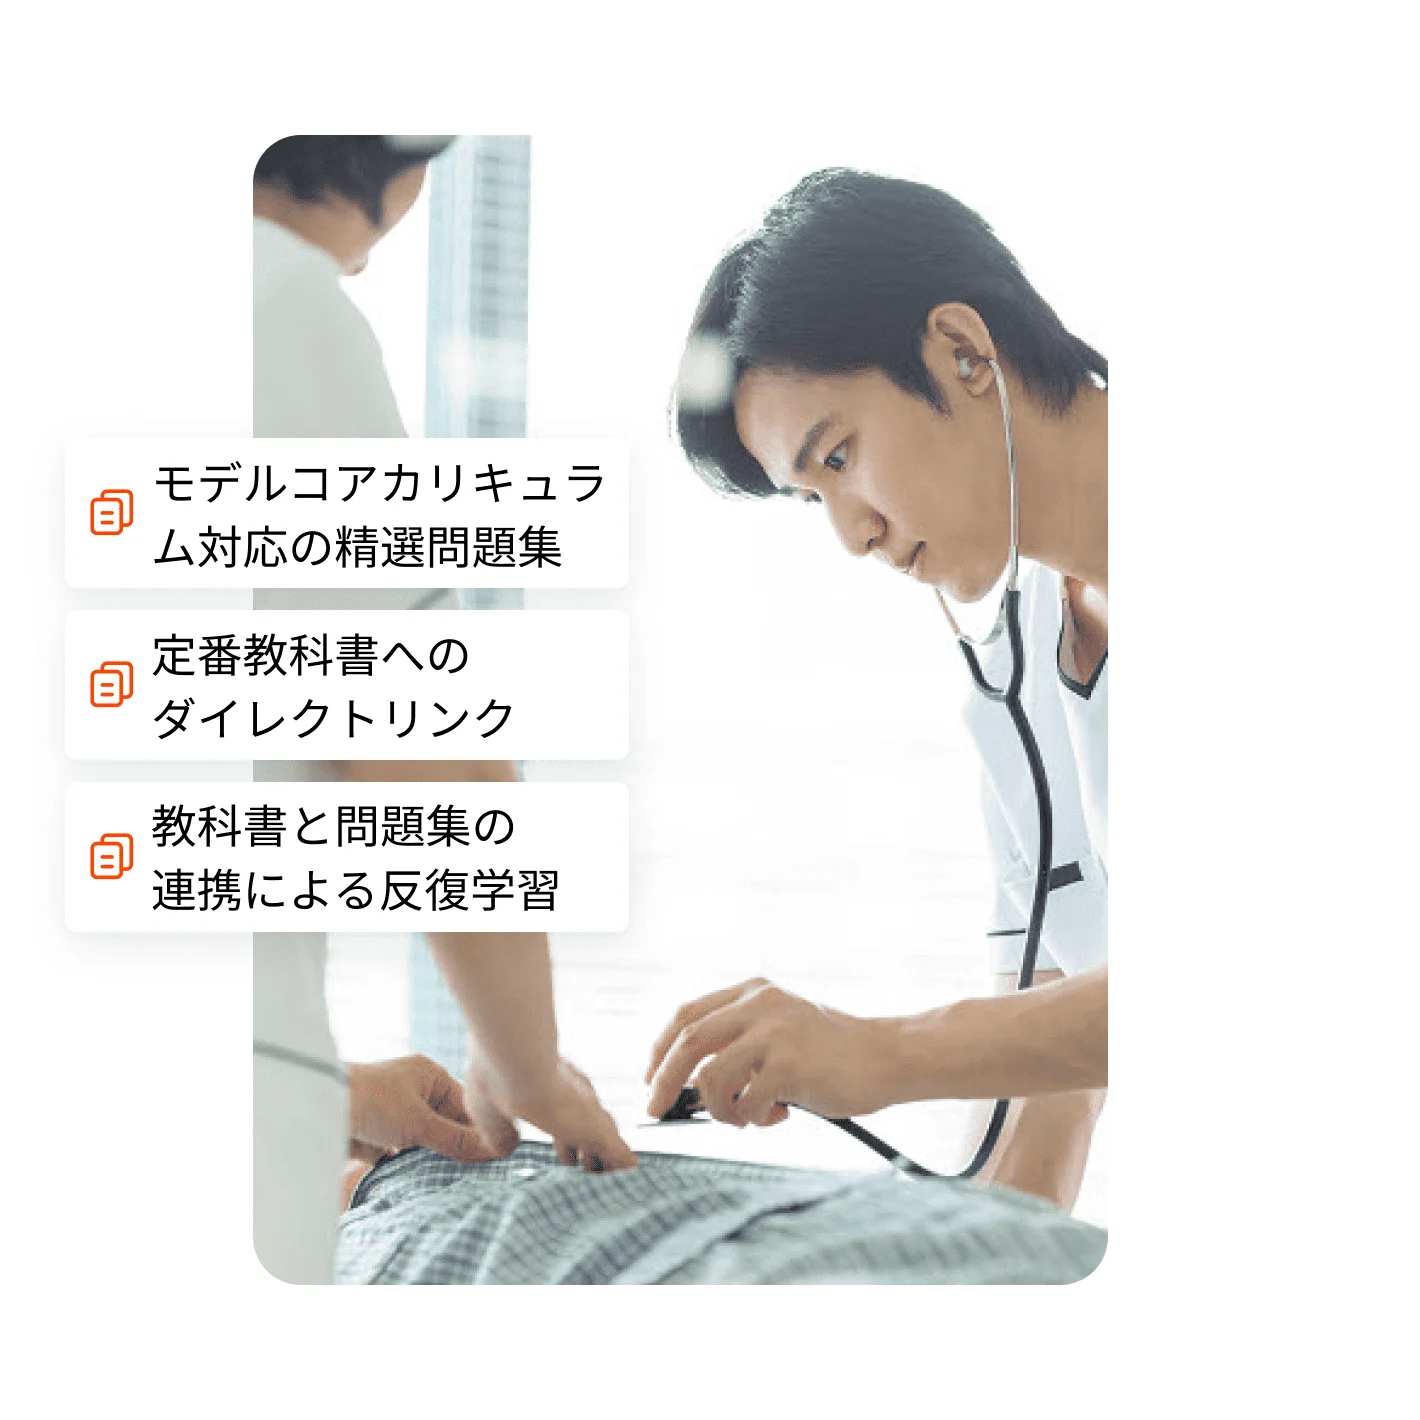 ClinicalKey Student Japan（CKS）